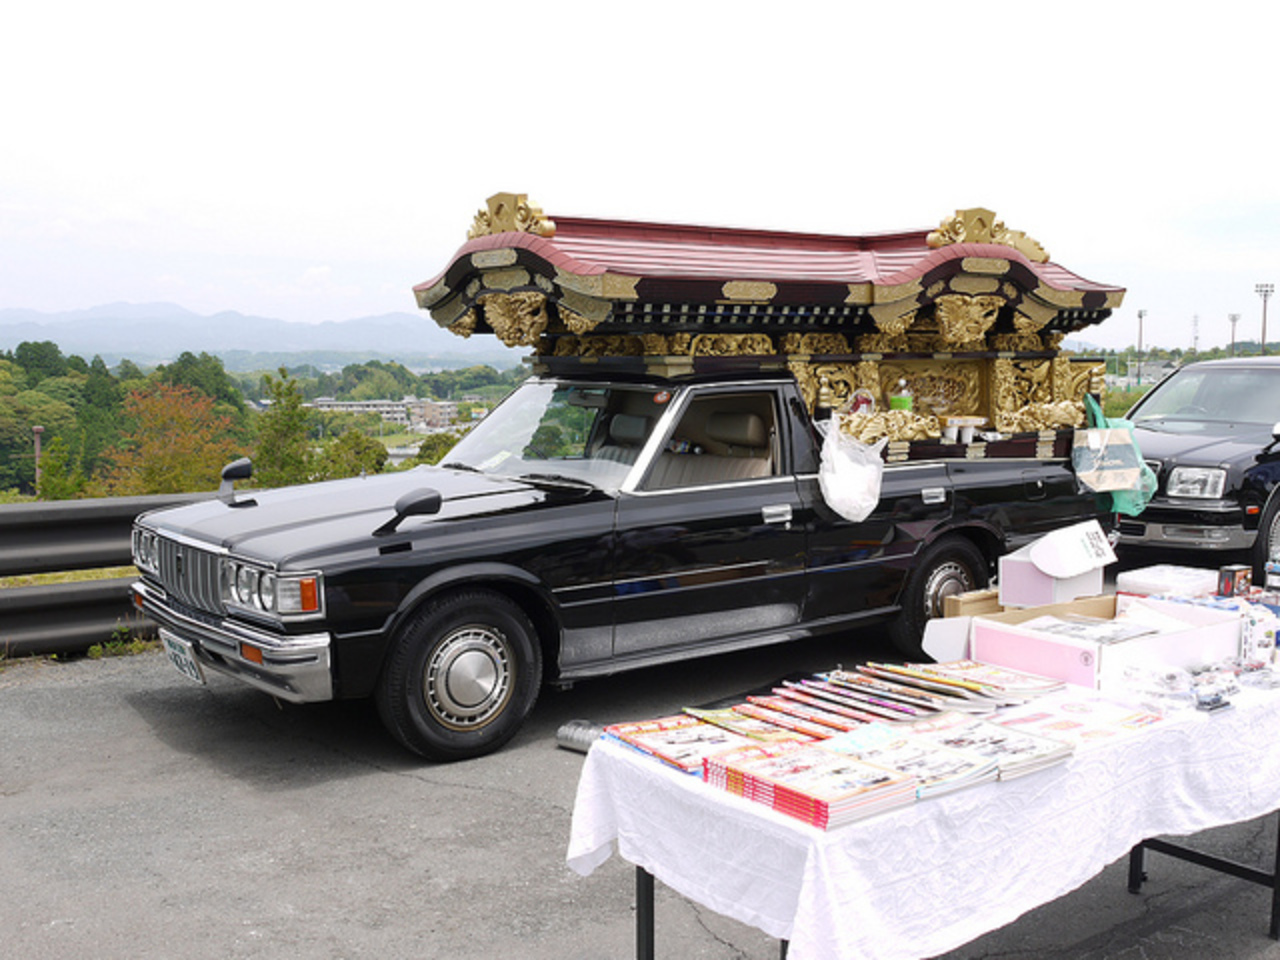 Flickr: The Japanese Nostalgic Cars Pool